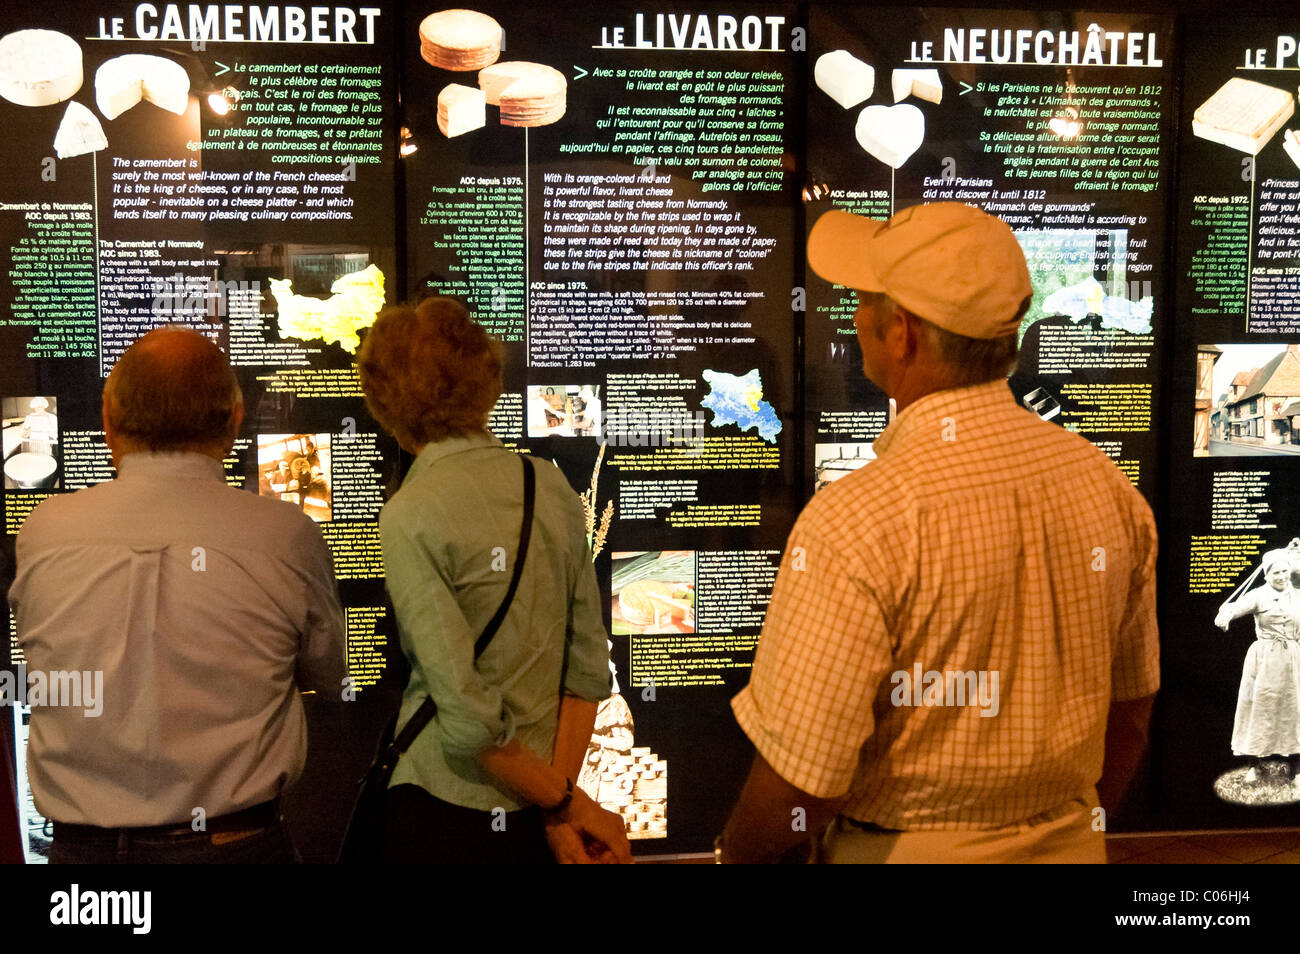 Camembert museum fotografías e imágenes de alta resolución - Alamy